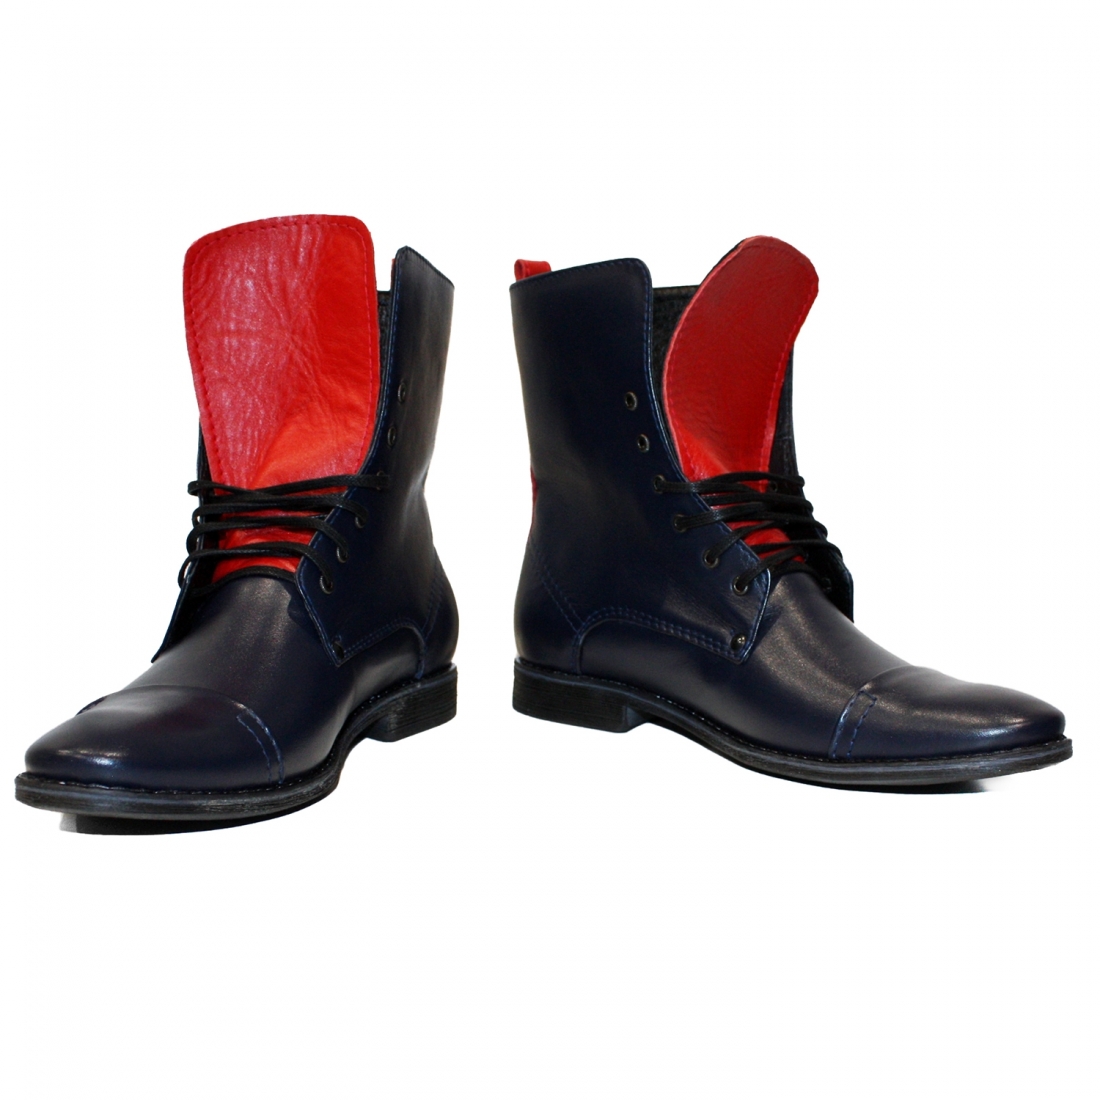 Modello Ronarello - High Boots - Handmade Colorful Italian Leather Shoes